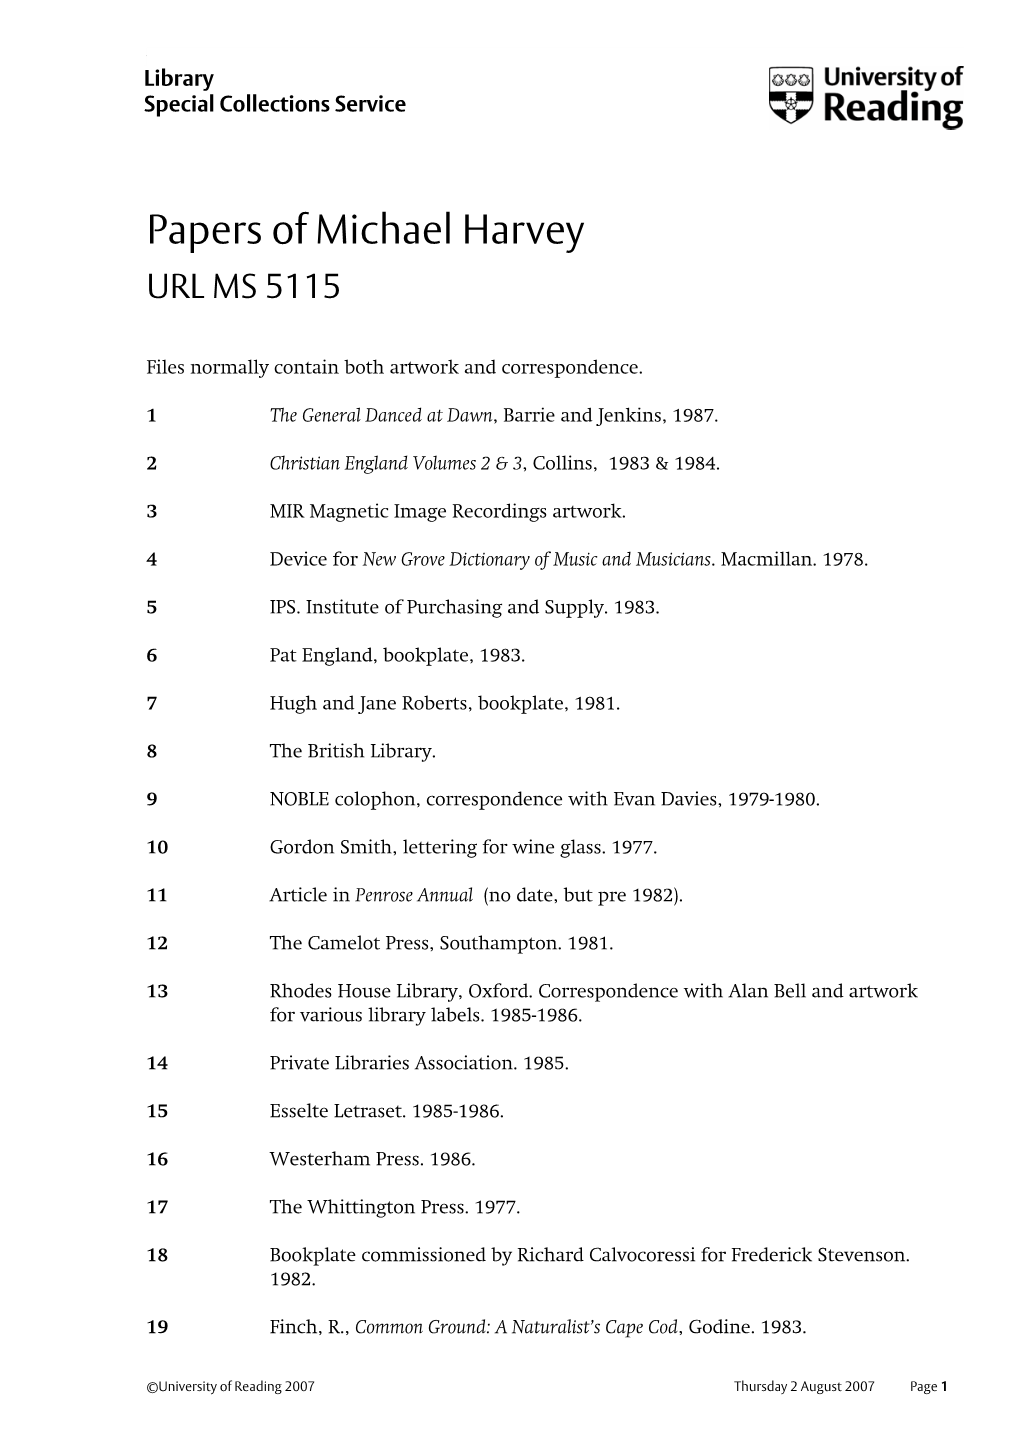 Handlist of the Papers of Michael Harvey